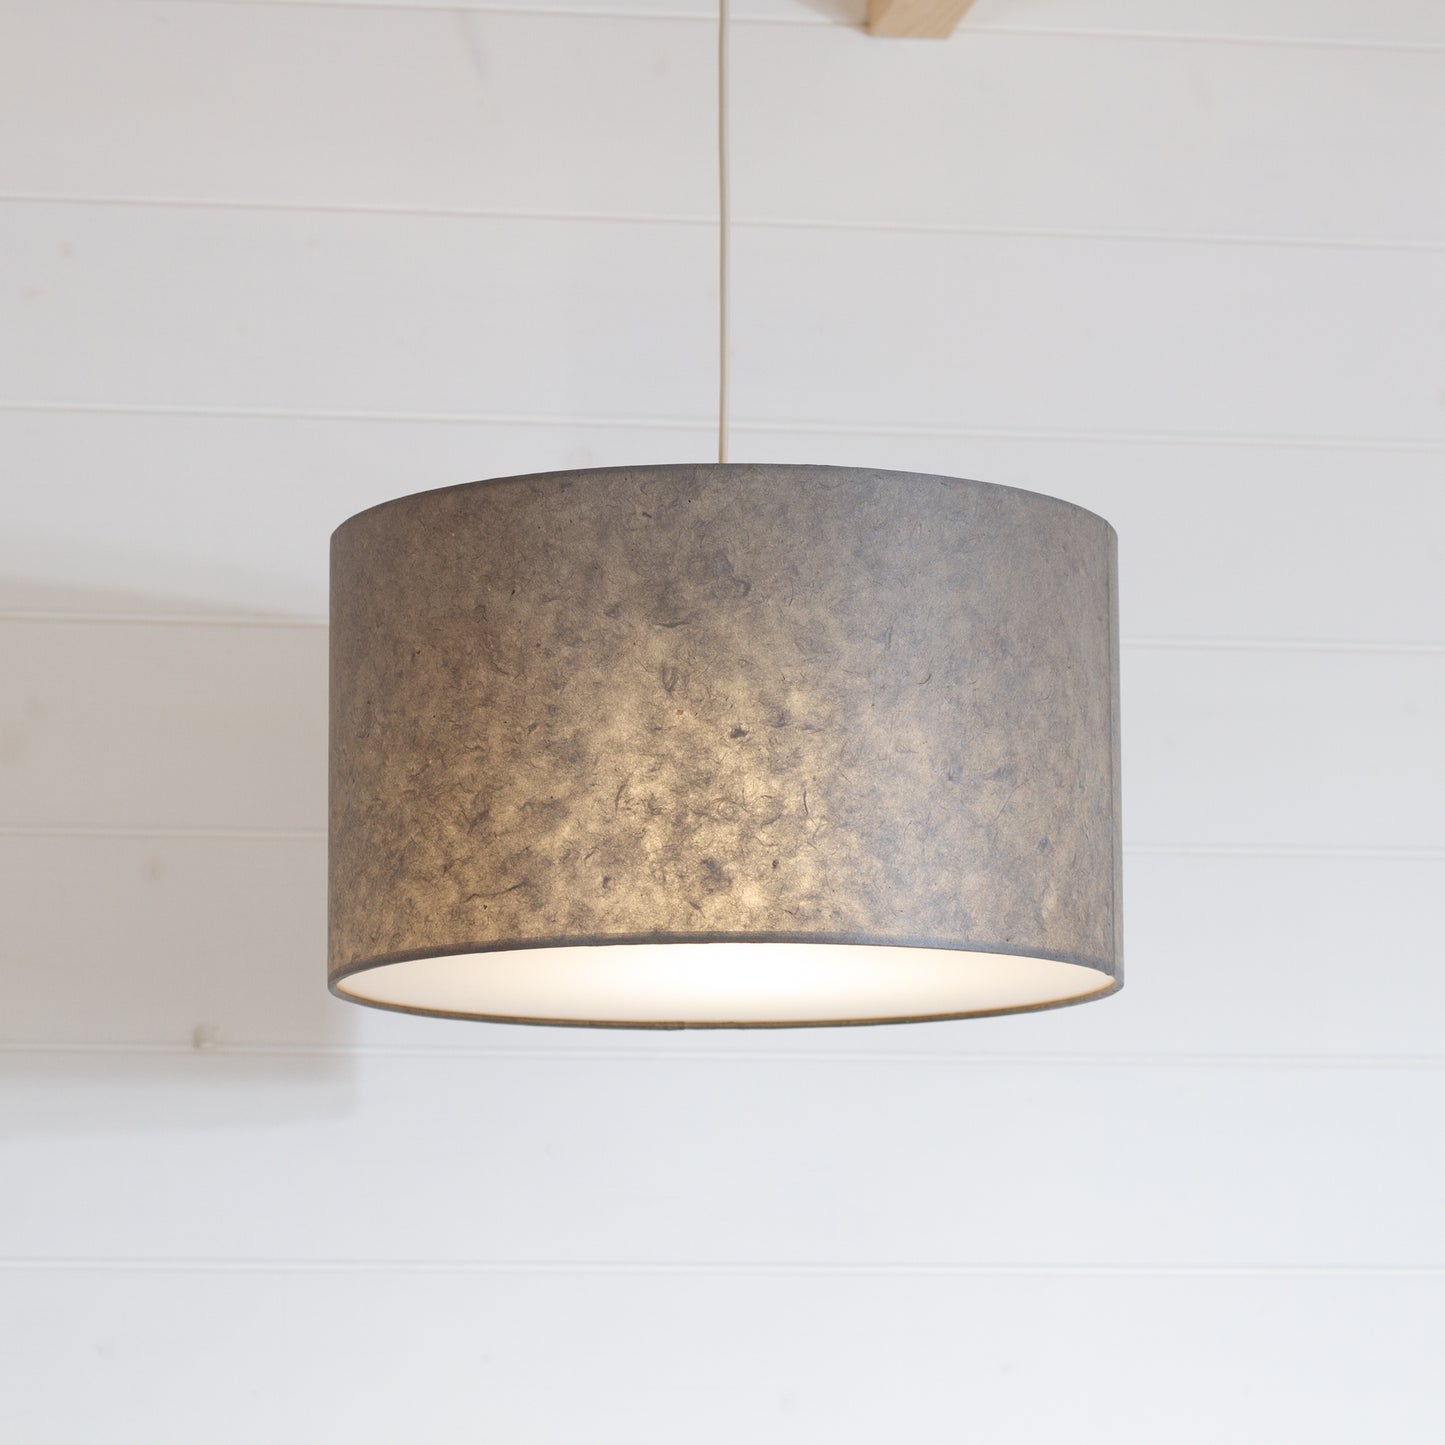 Drum Lamp Shade - P53 - Pewter Grey, 35cm(d) x 20cm(h)